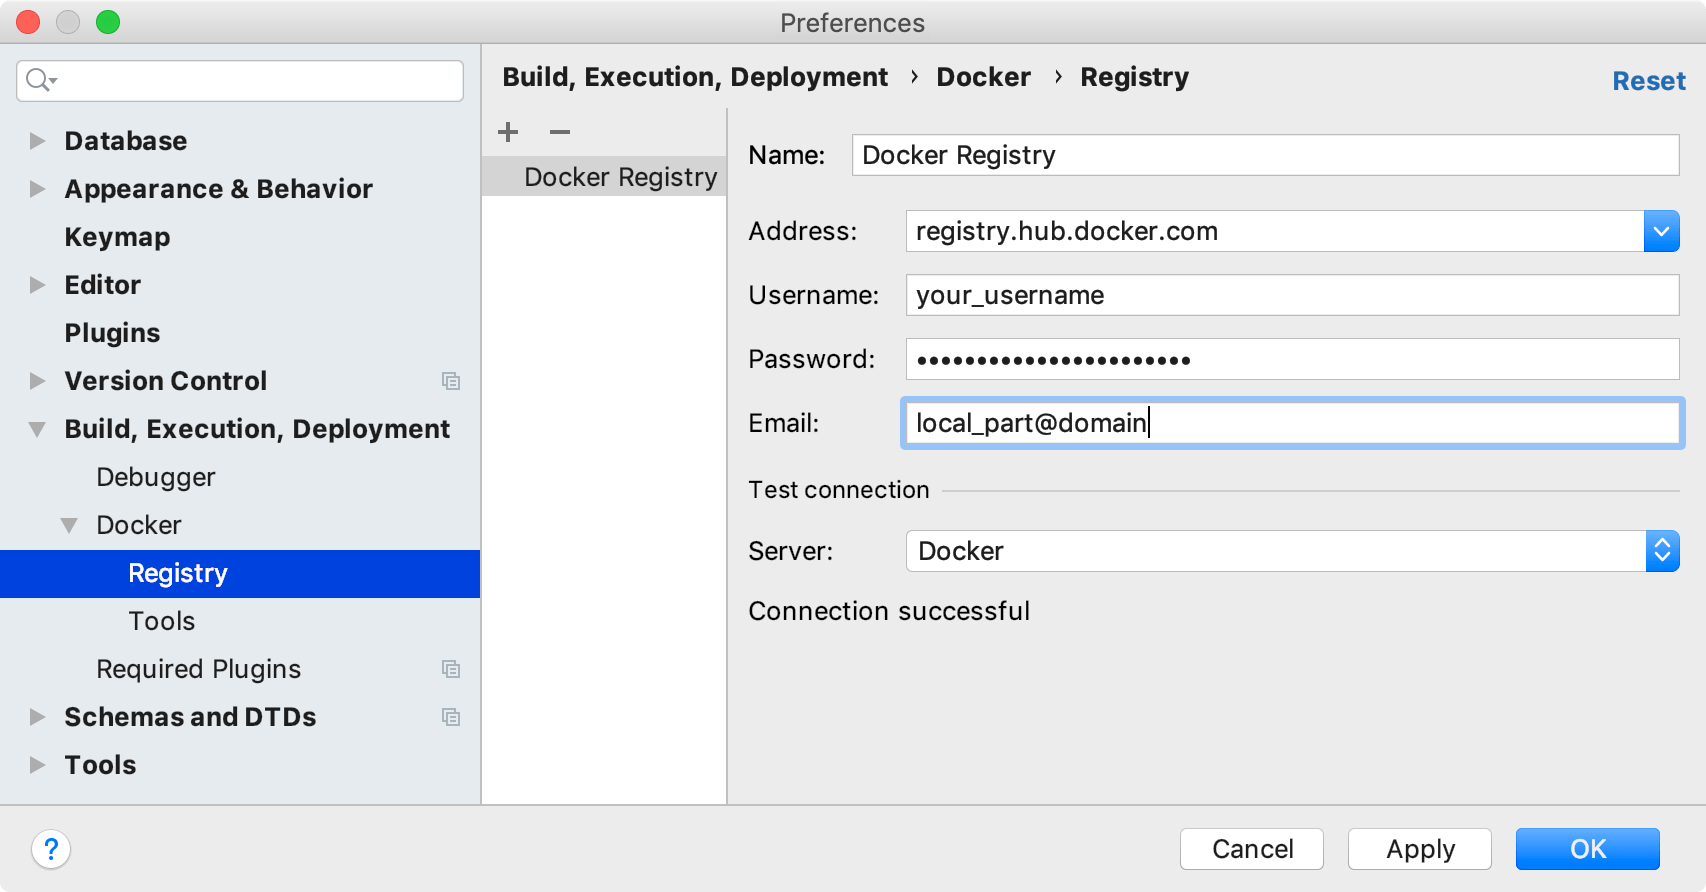 The Docker Registry dialog